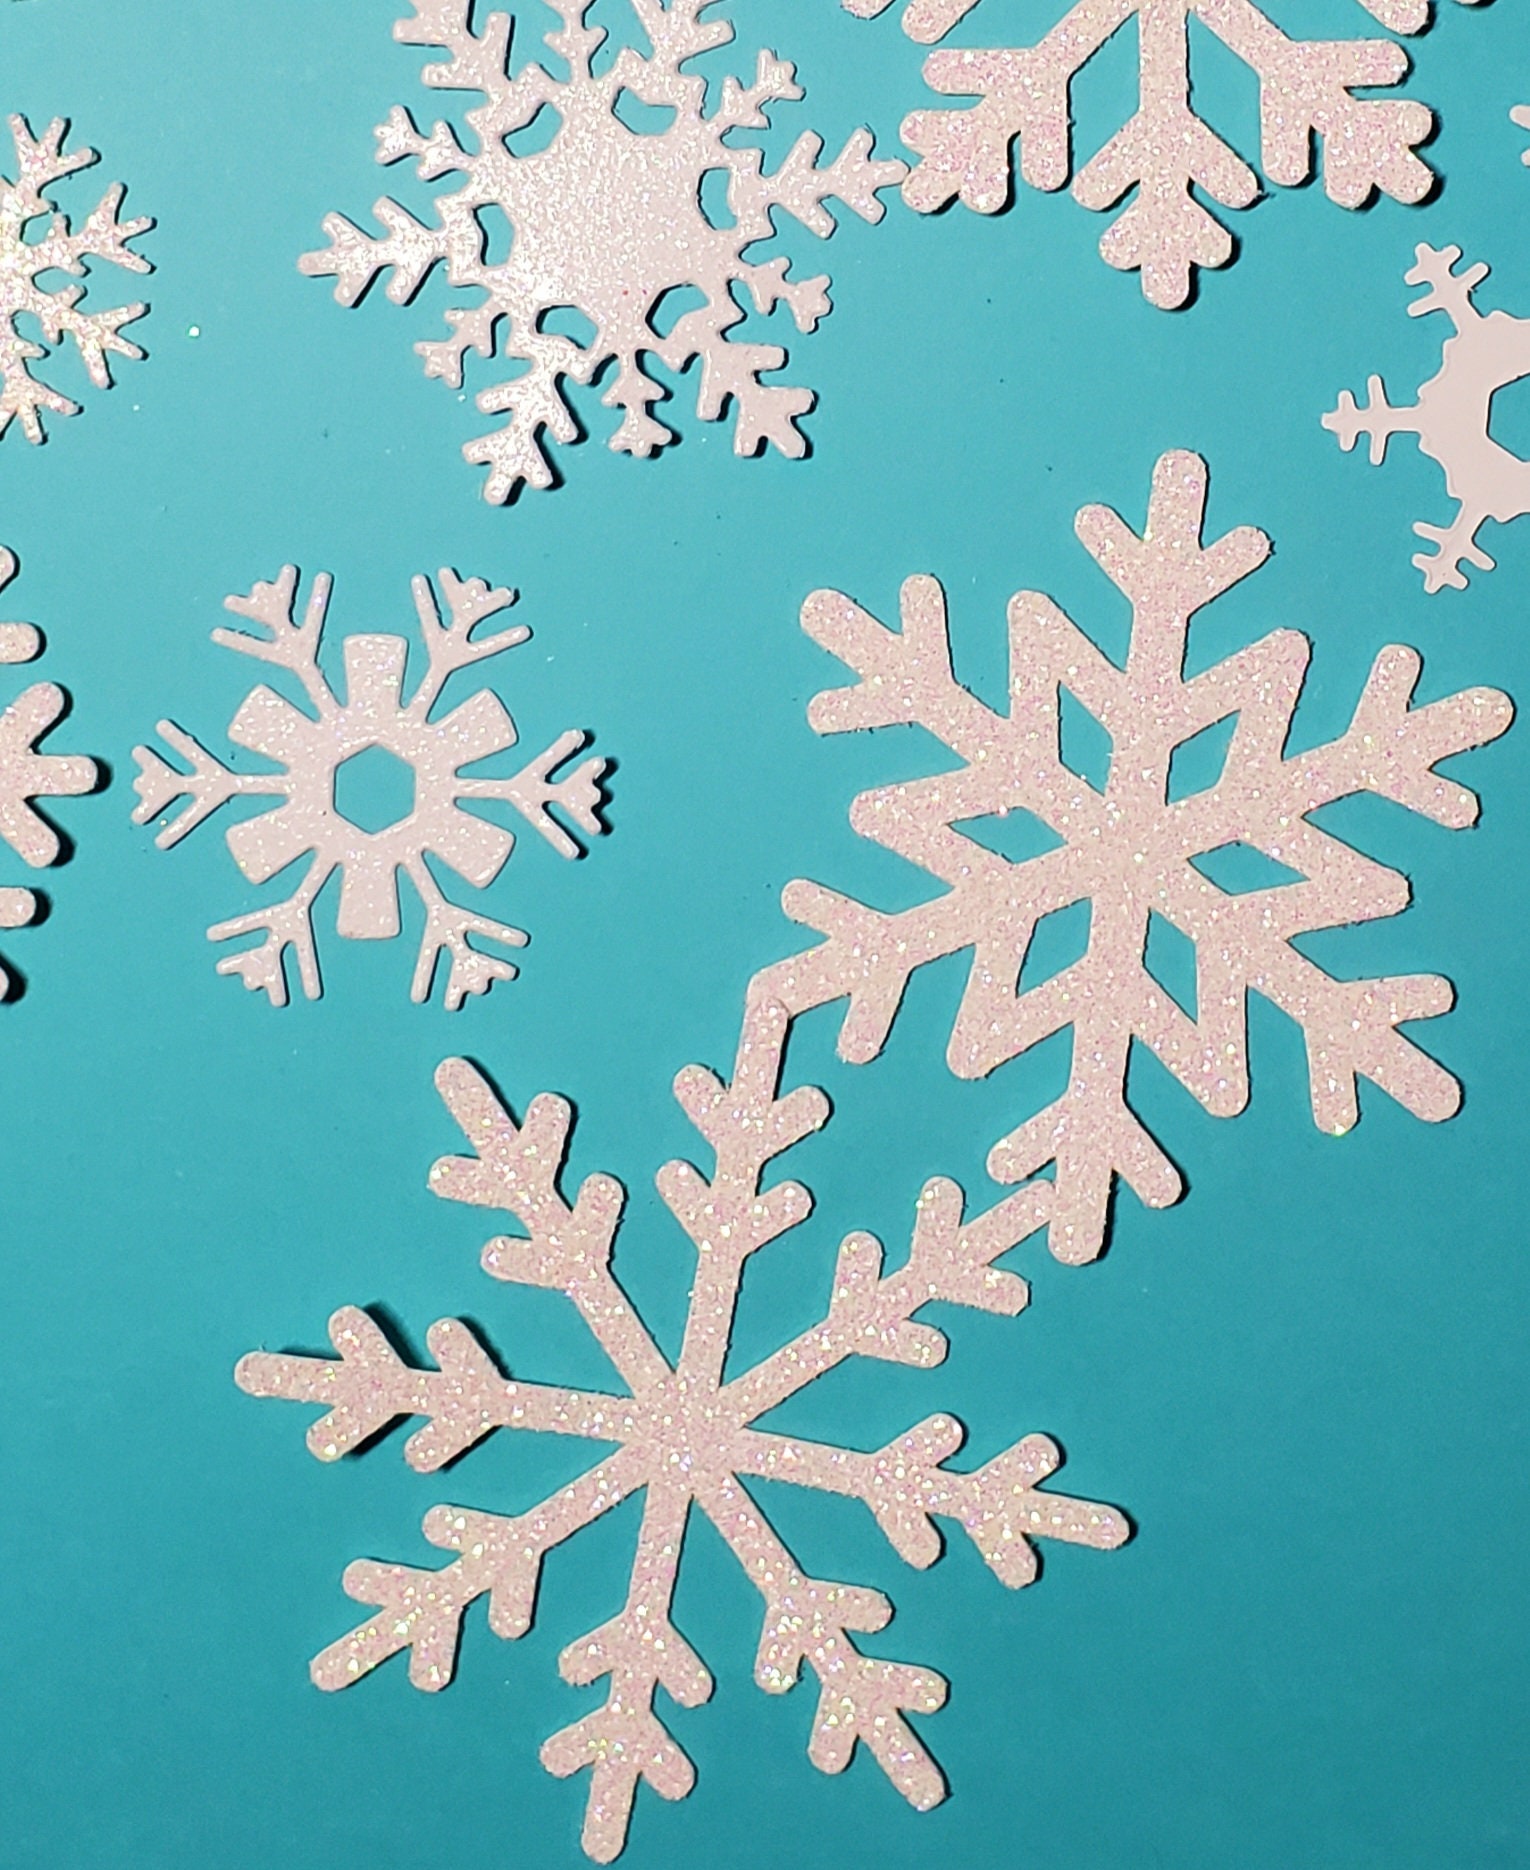 Felt Snowflake 2 Die Cuts-winter Snowflakes Cut Out Felt Pieces Frozen  Inspired-decorations-bible Journaling-quilt Appliques-quiet Books -   Israel